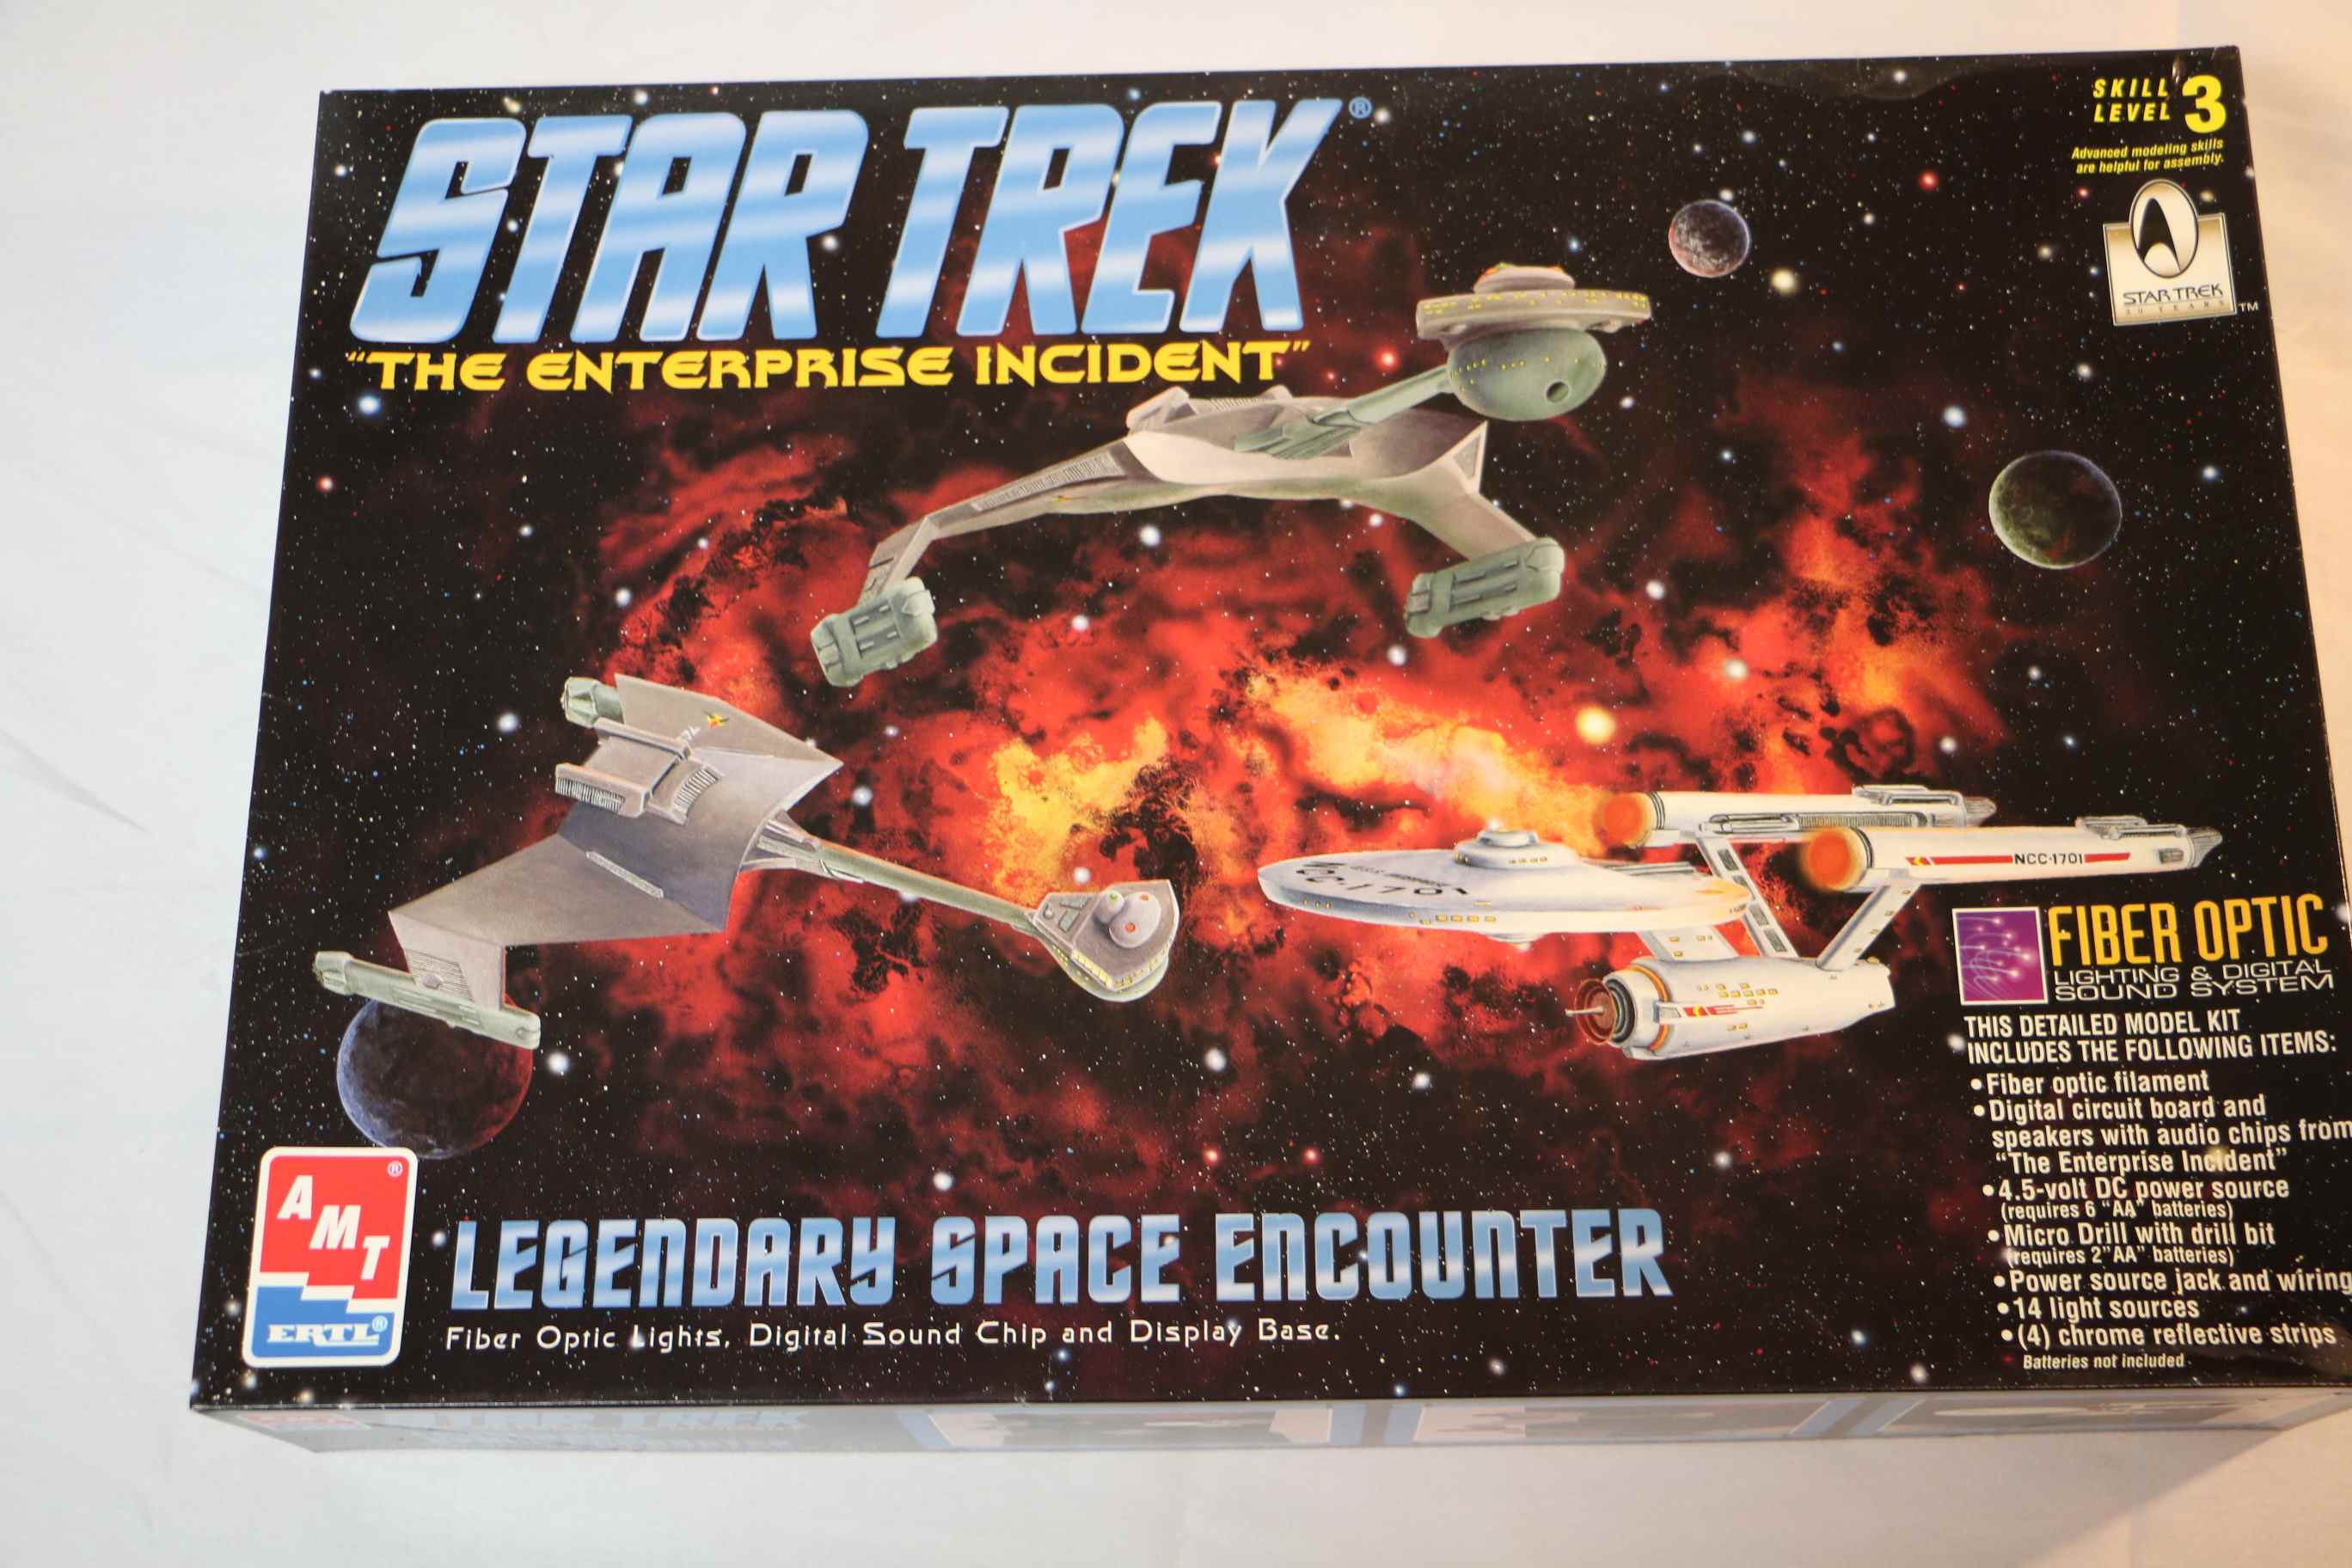 AMT8254 - AMT Star Trek 'The Enterprise Incident' 30th Anniversary Fiber Optic